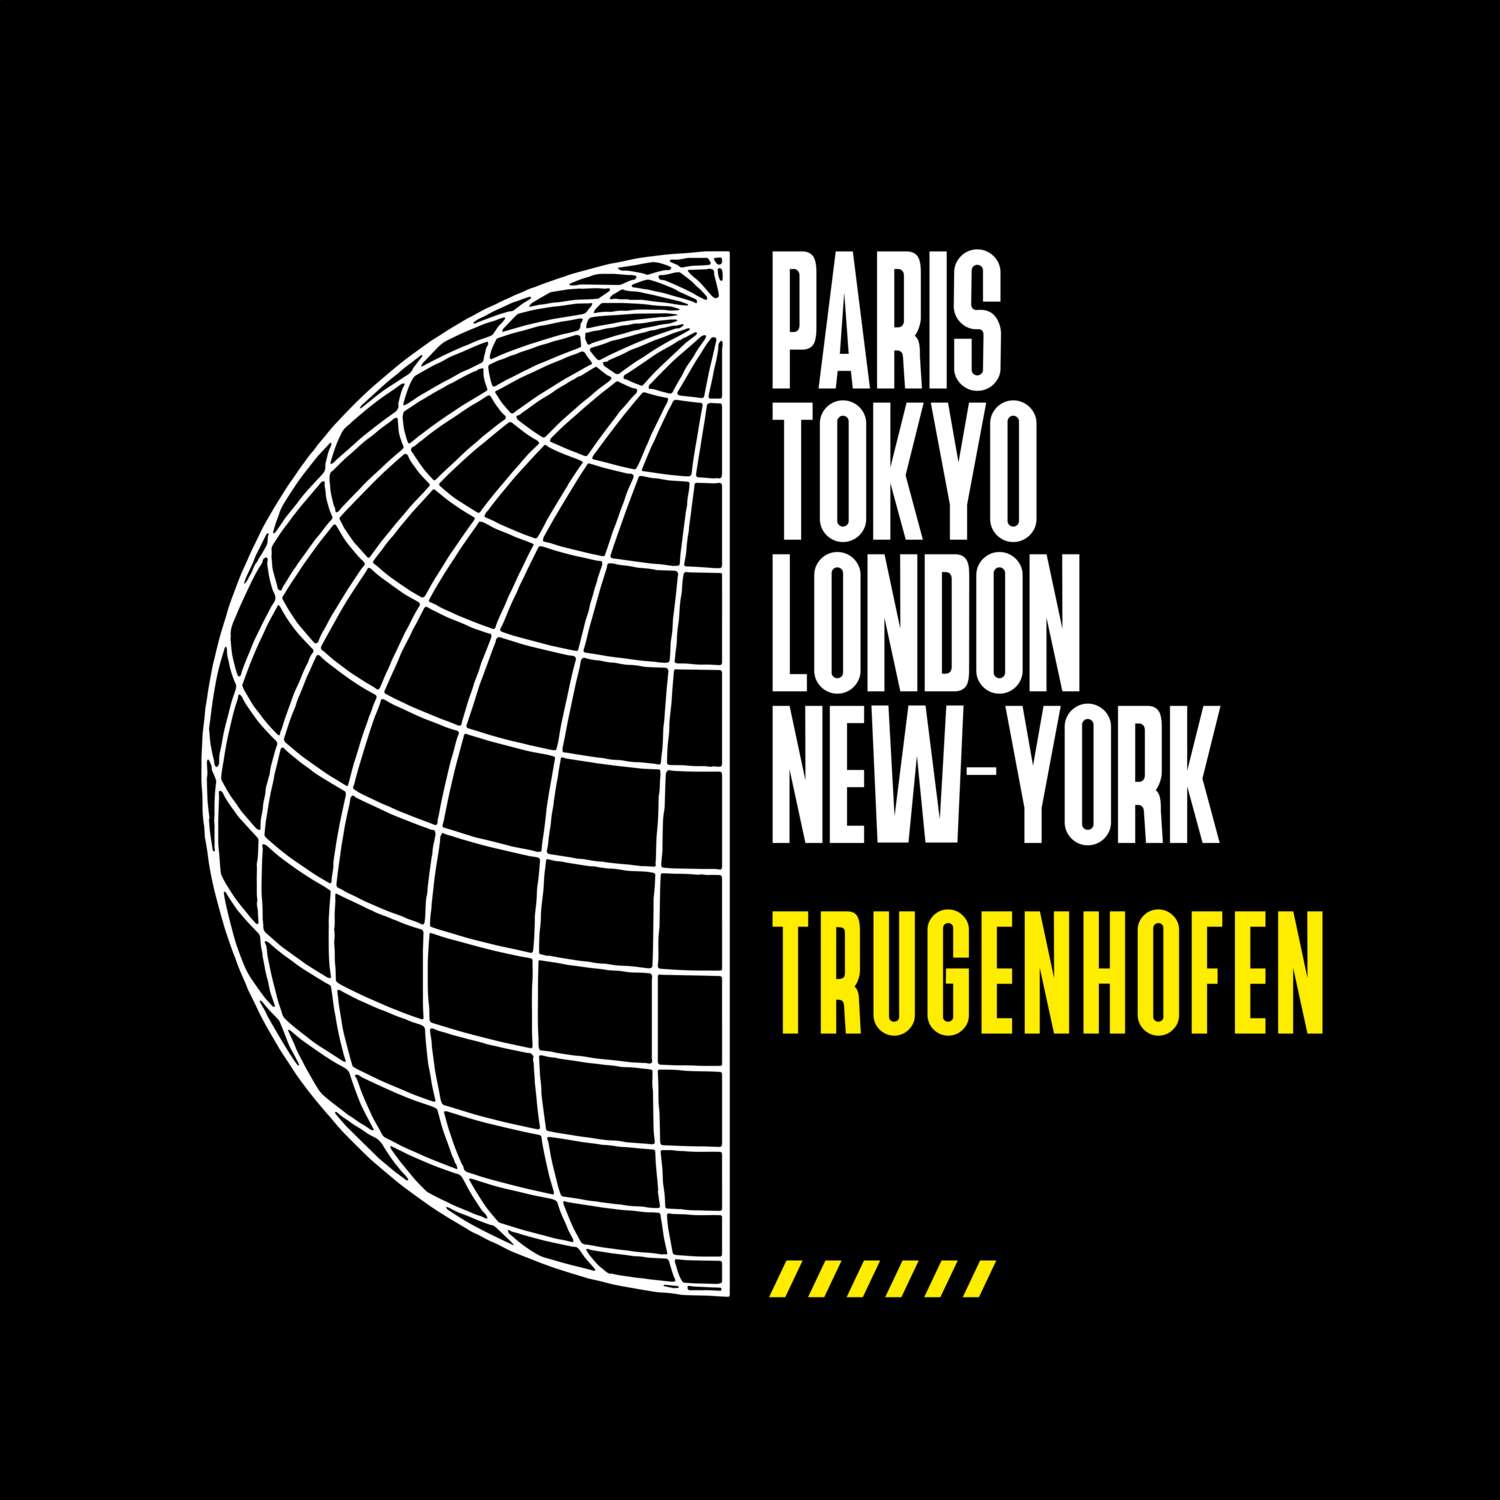 Trugenhofen T-Shirt »Paris Tokyo London«